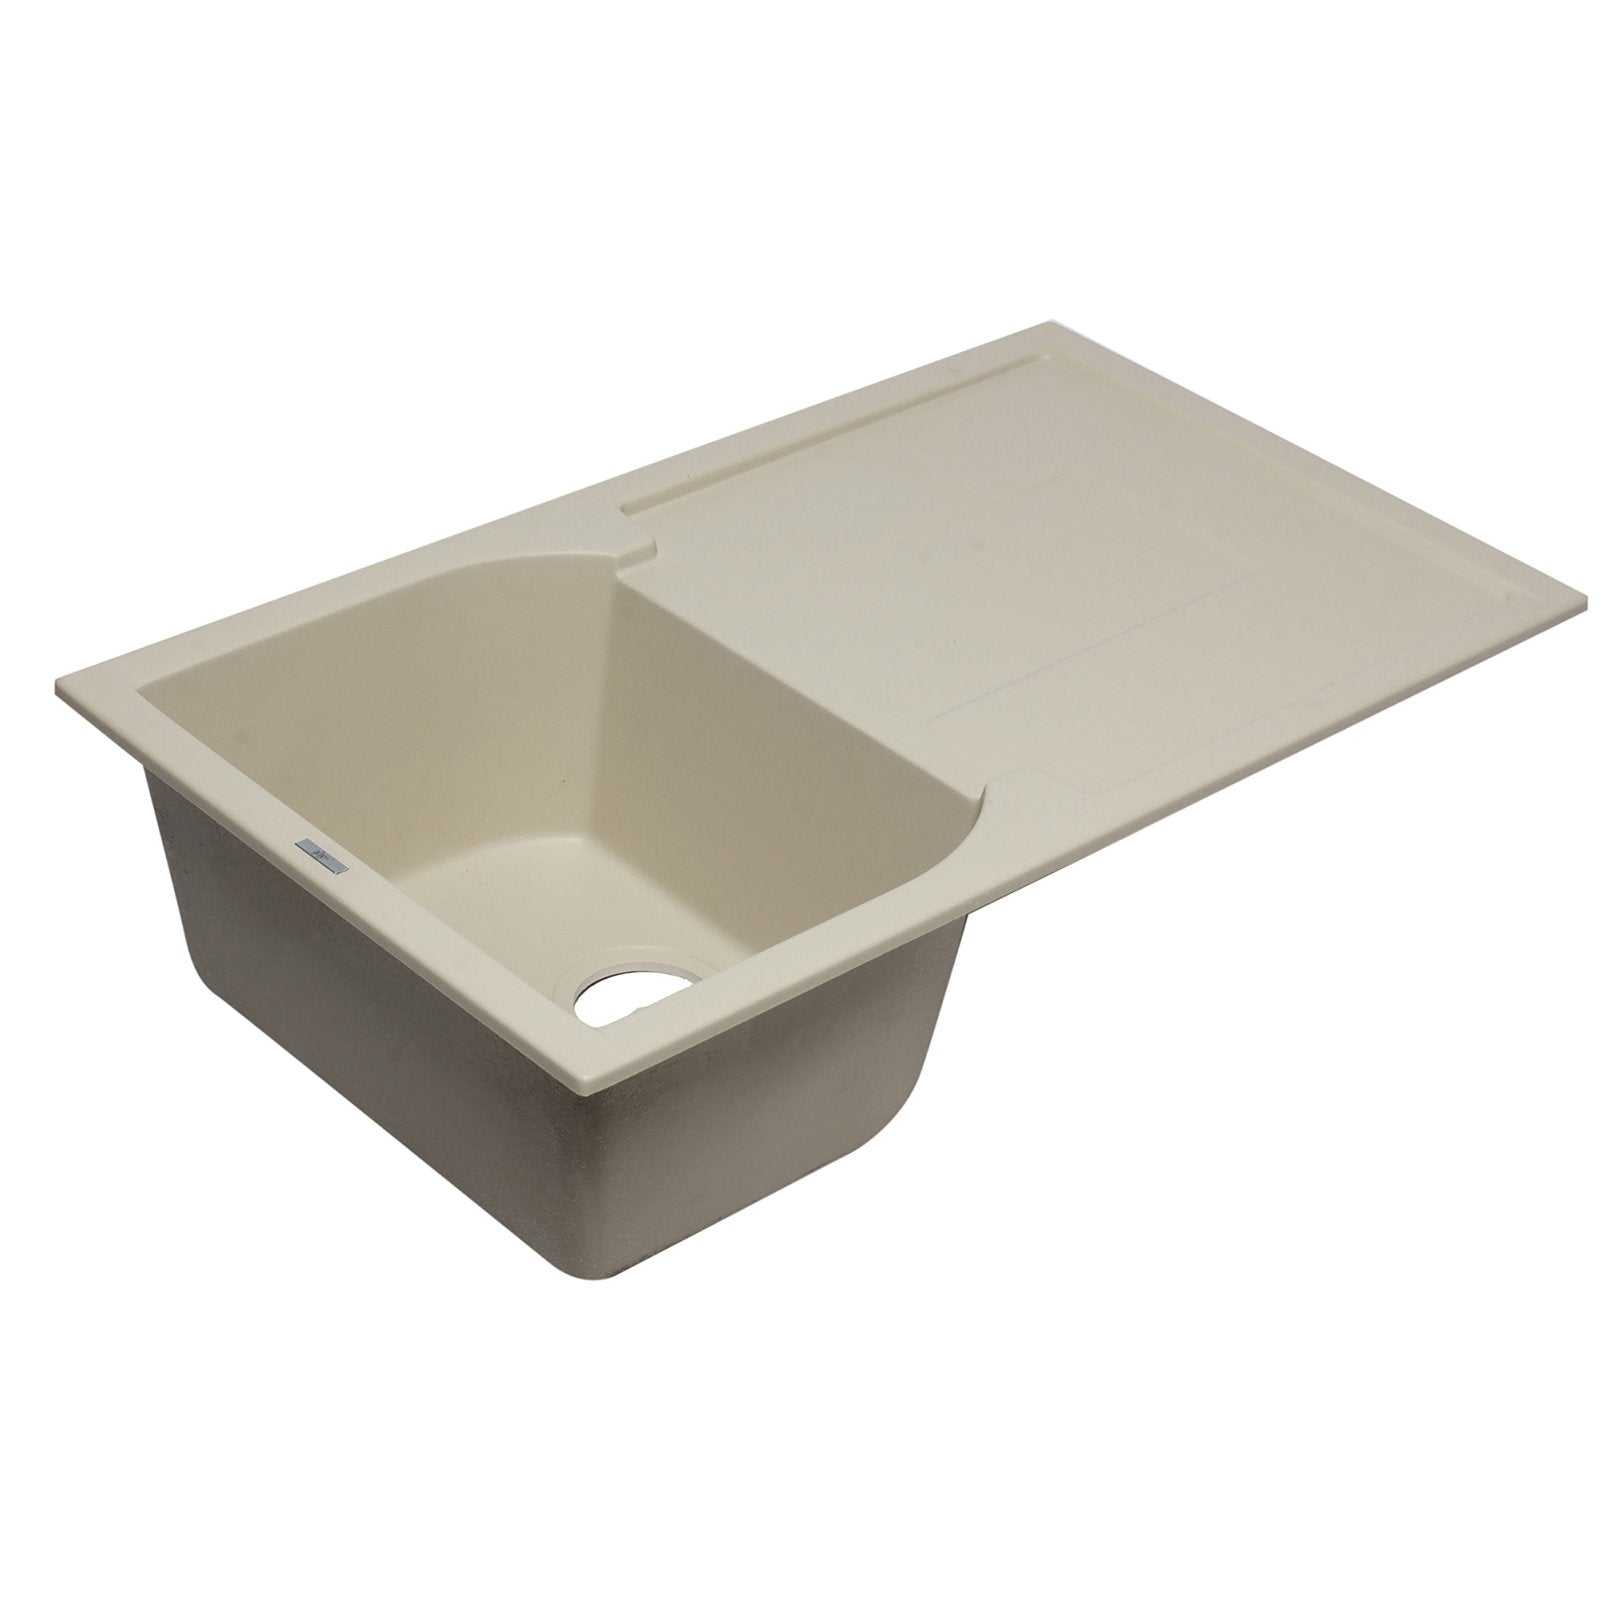 ALFI, ALFI AB1620DI-B Biscuit 34" Single Bowl Granite Composite Sink with Drainboard